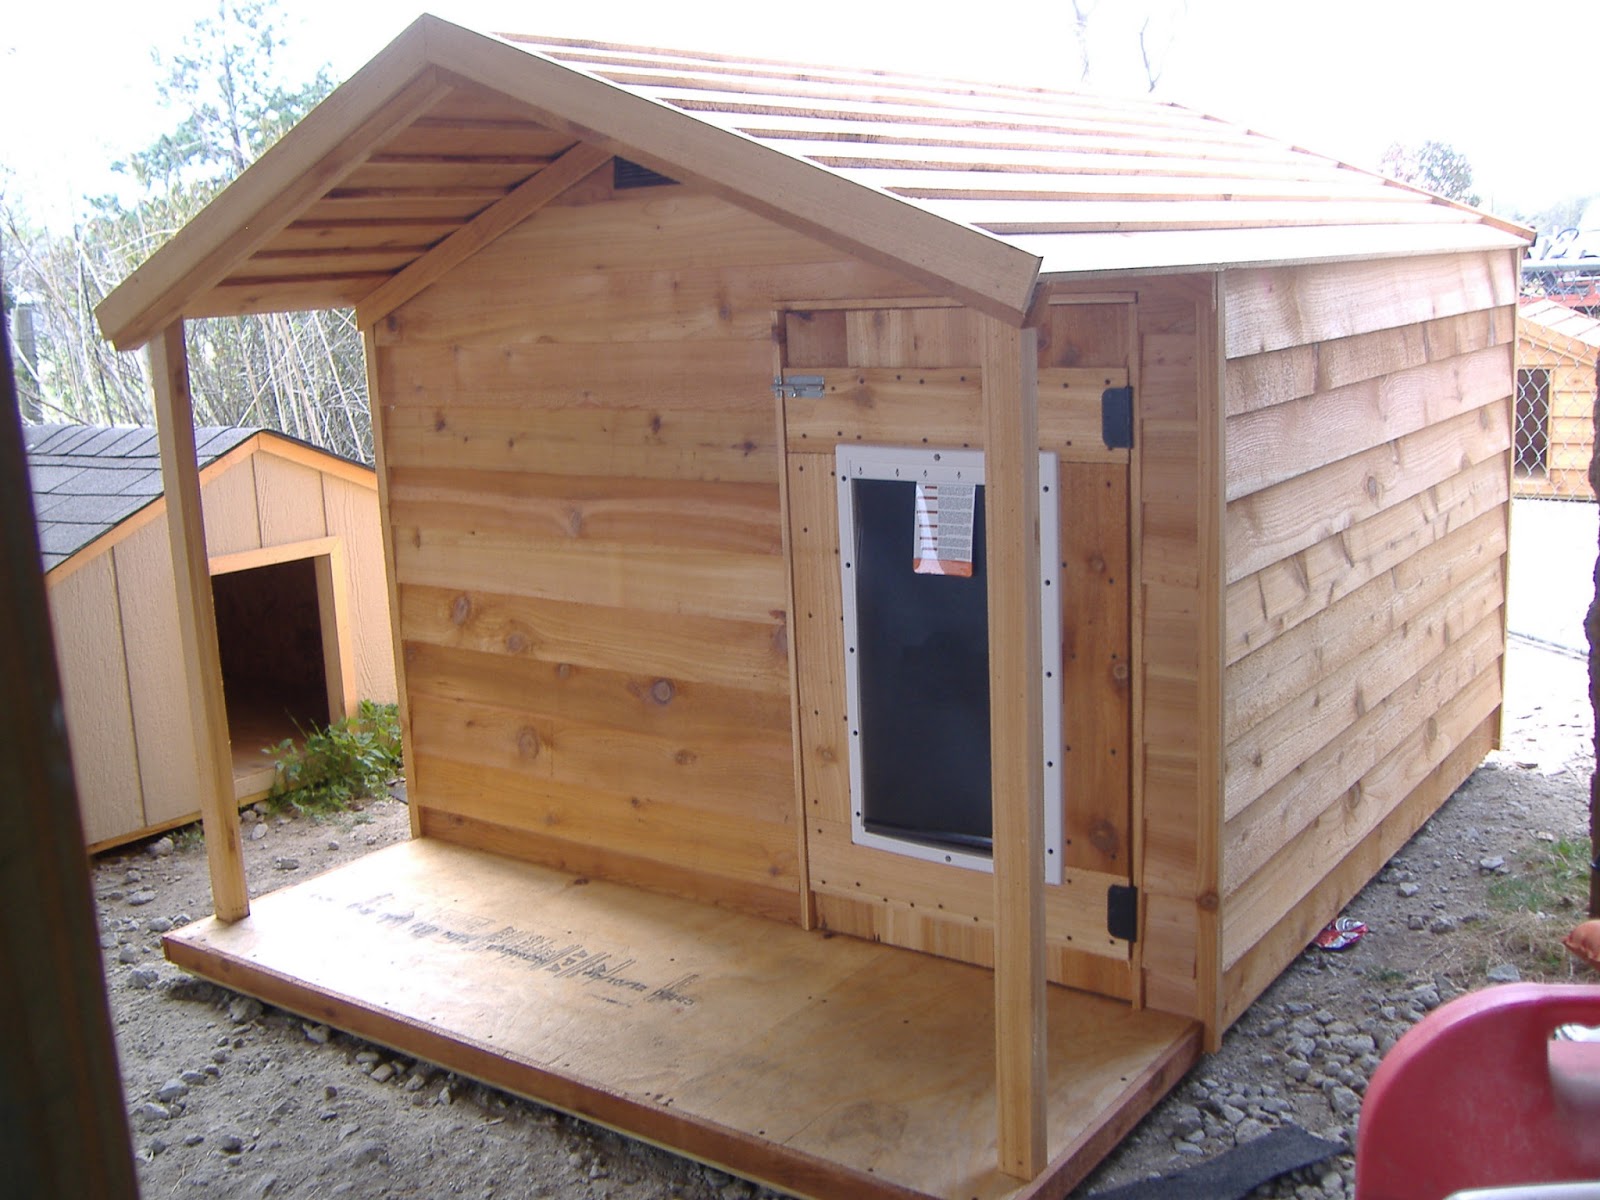 Custom Ac Heated Insulated Dog House